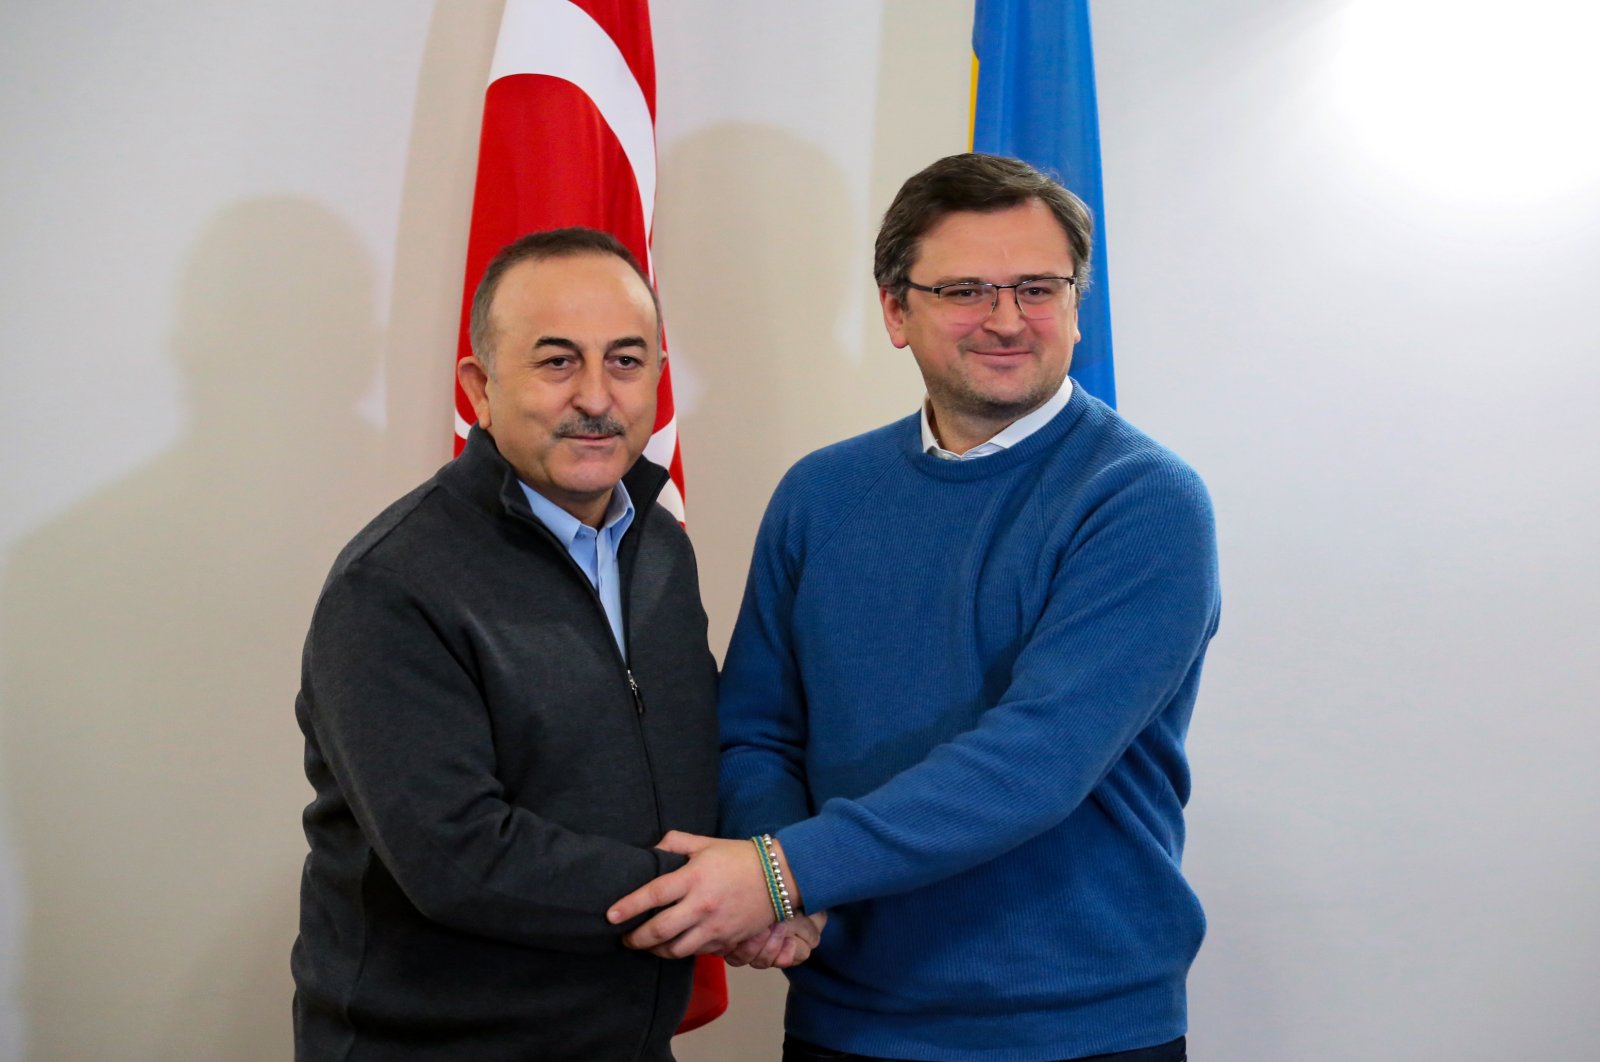 Foreign Minister Mevlüt Çavuşoğlu (L) and Ukrainian Foreign Minister Dmytro Kuleba shake hands during a meeting in Lviv, western Ukraine, March 17, 2022. (Reuters Photo)